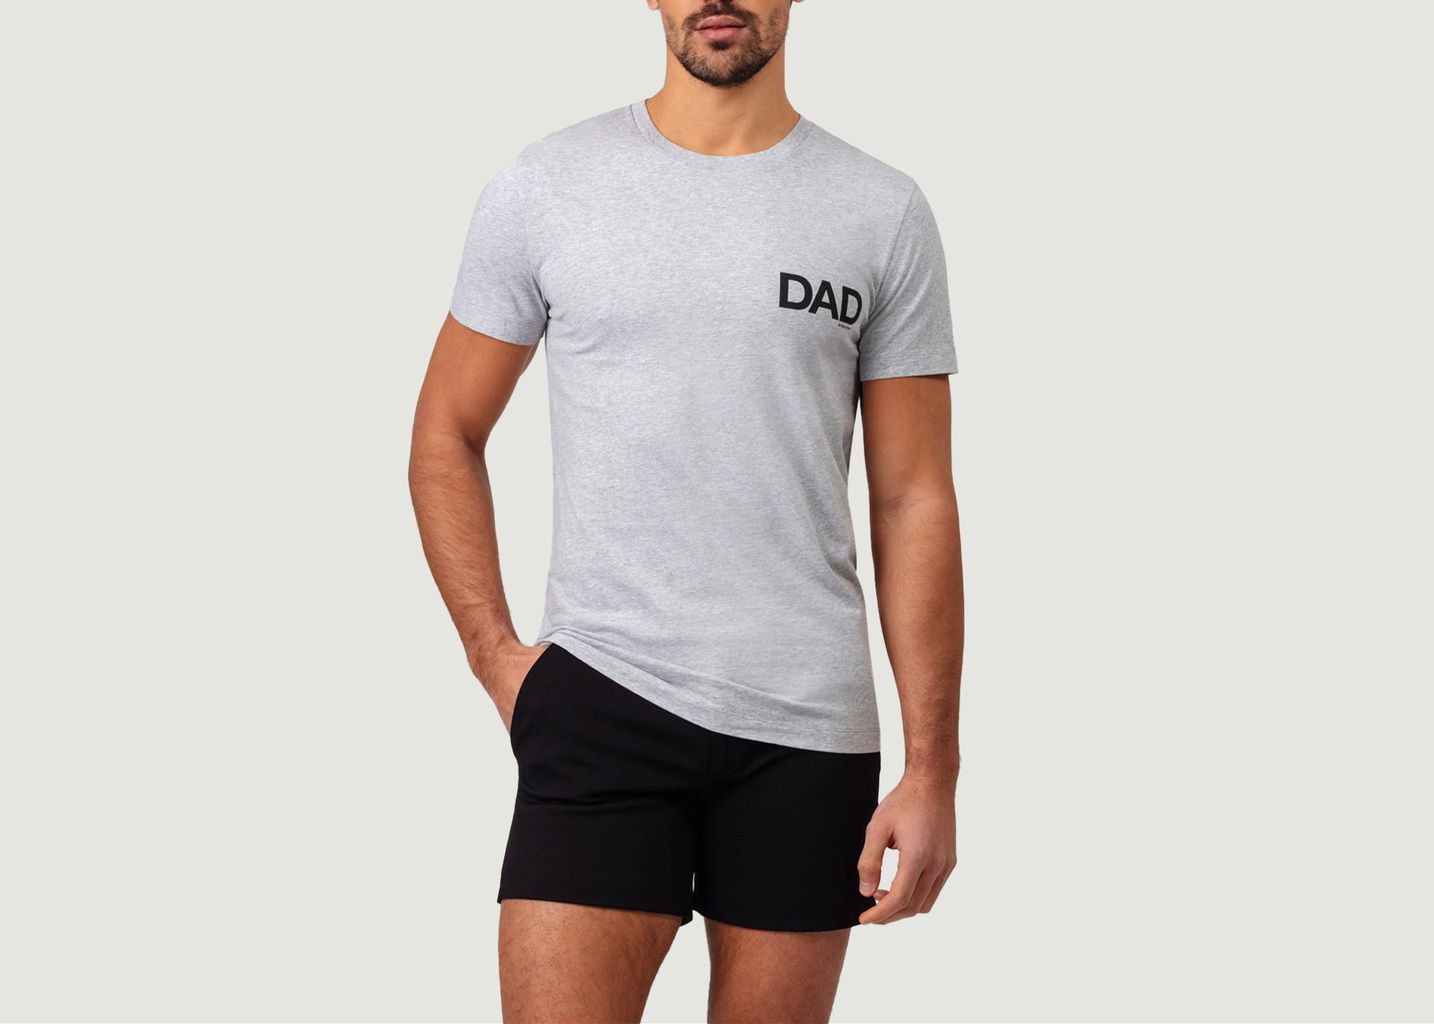 DAD T-shirt - Ron Dorff